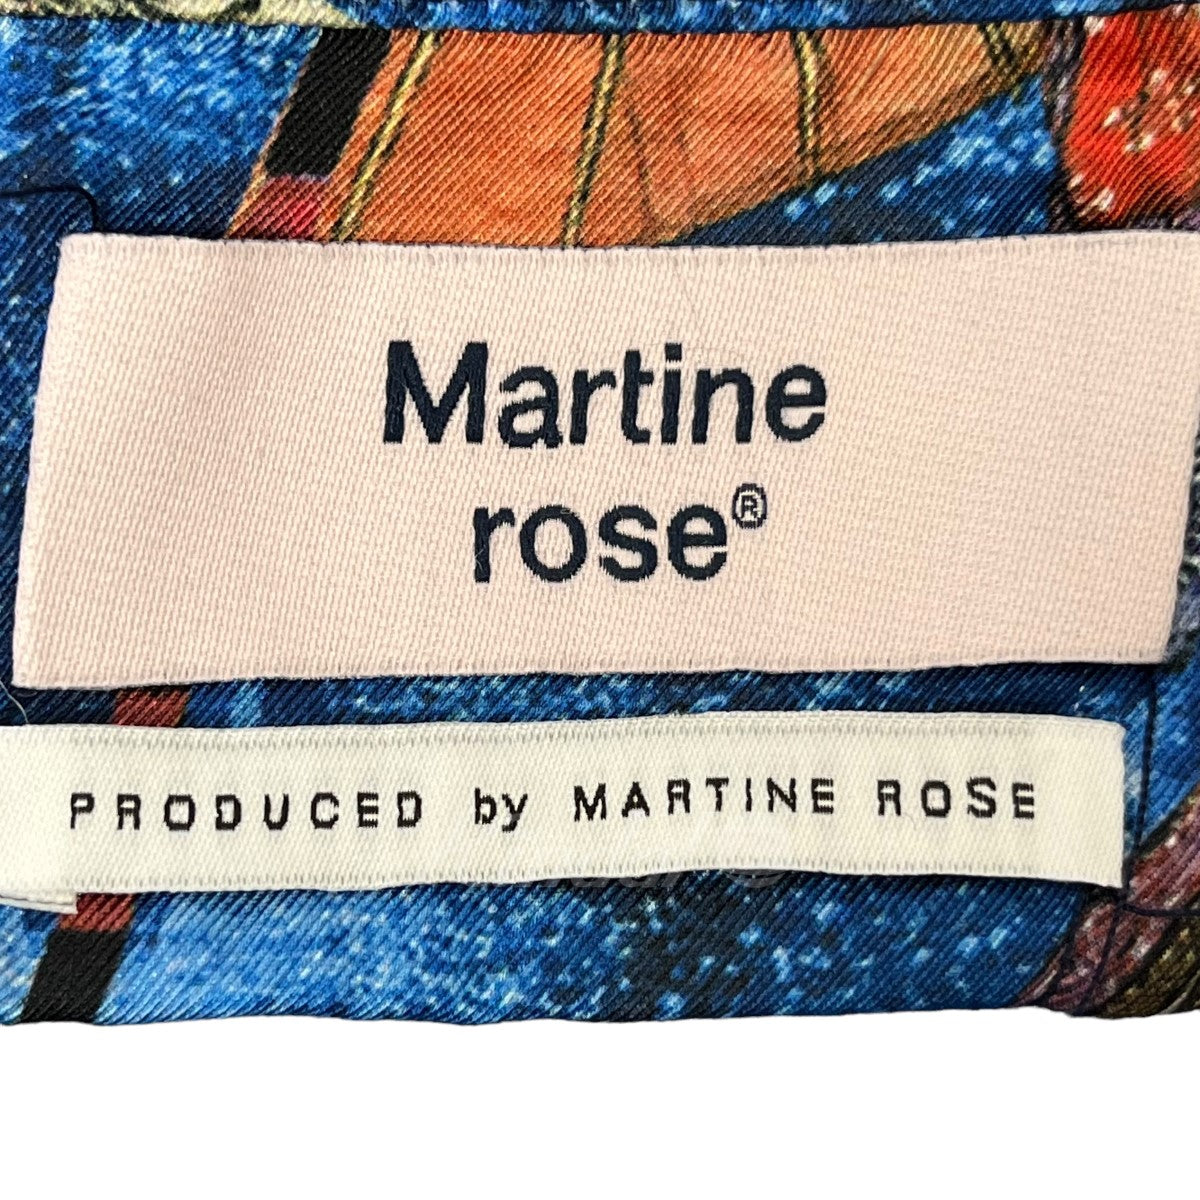 Martine rose(マーティンローズ) 歌舞伎半袖レーヨンシャツ 3040ME11X 